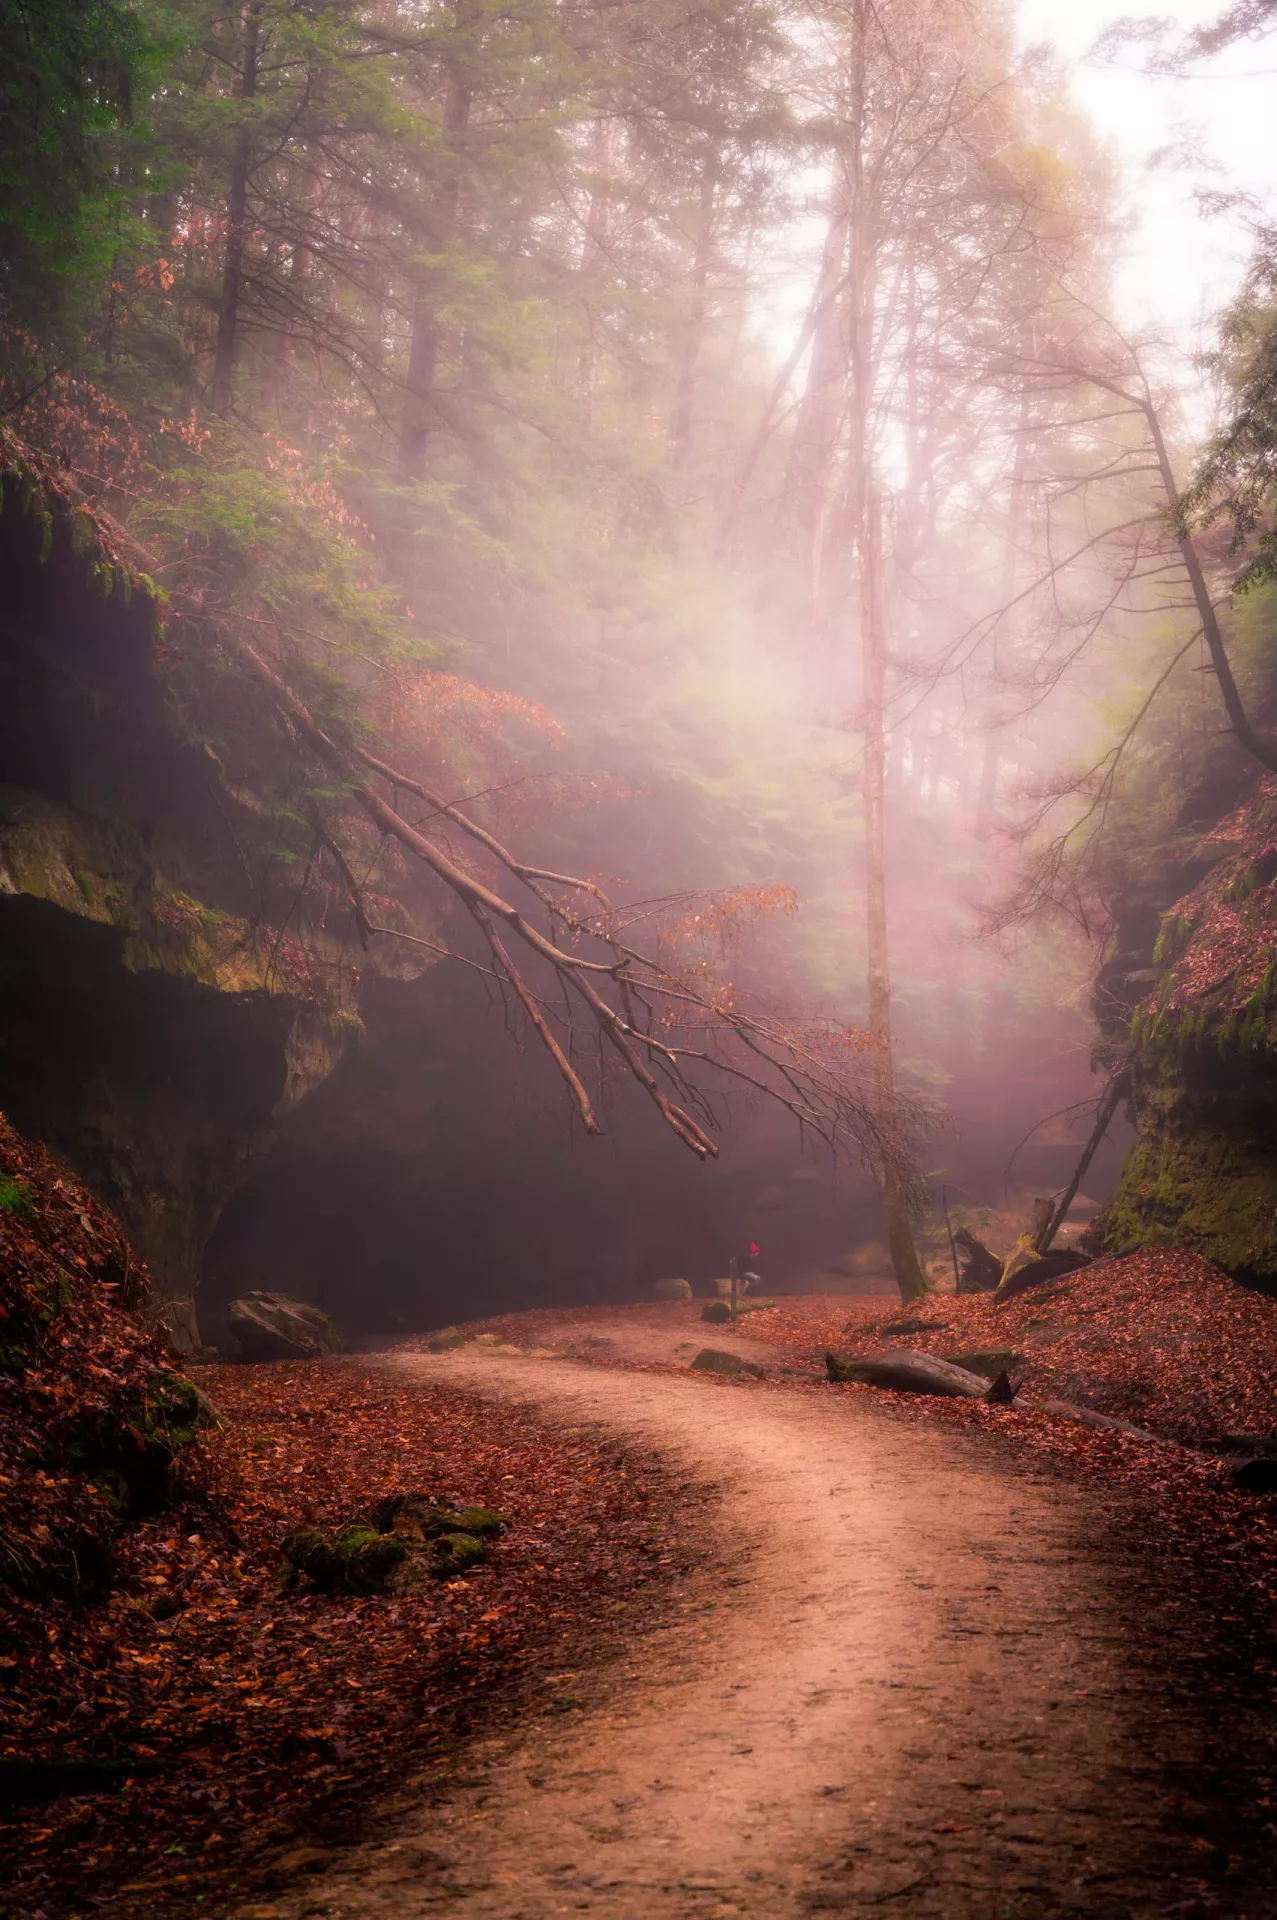 Shows a path under a fallen tree into fog